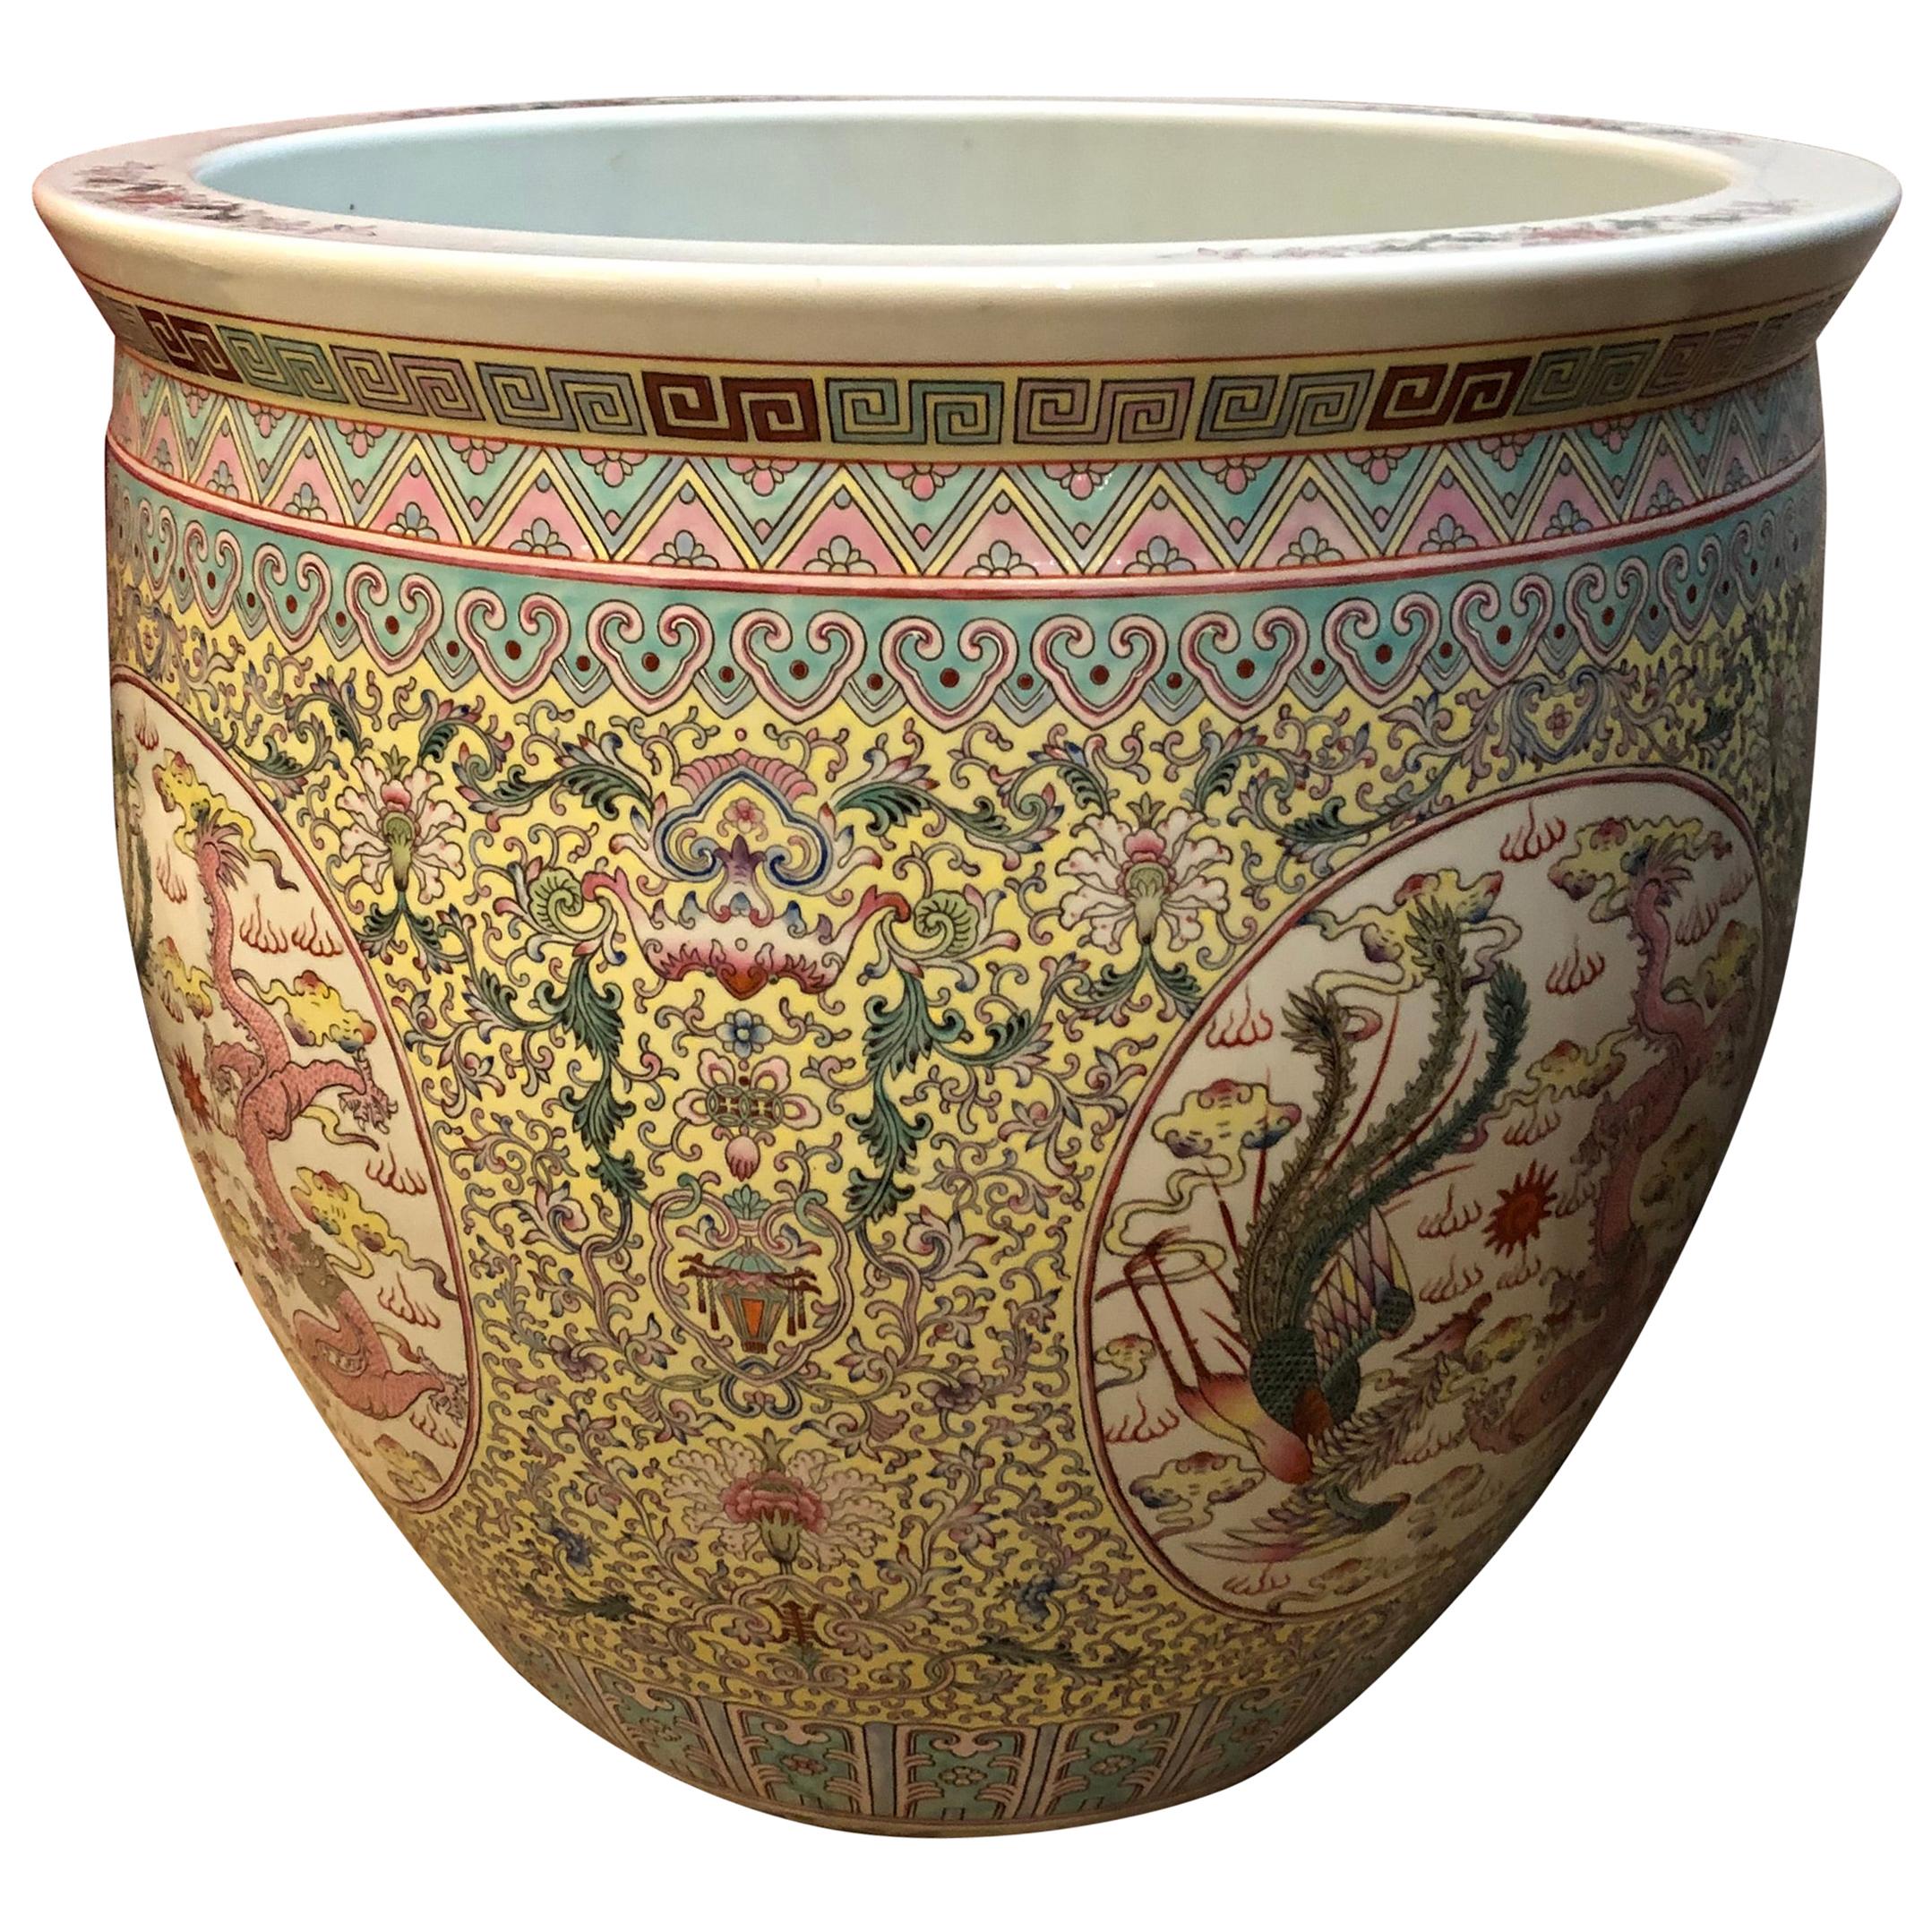 Beautiful Large Ceramic Chinese Planter